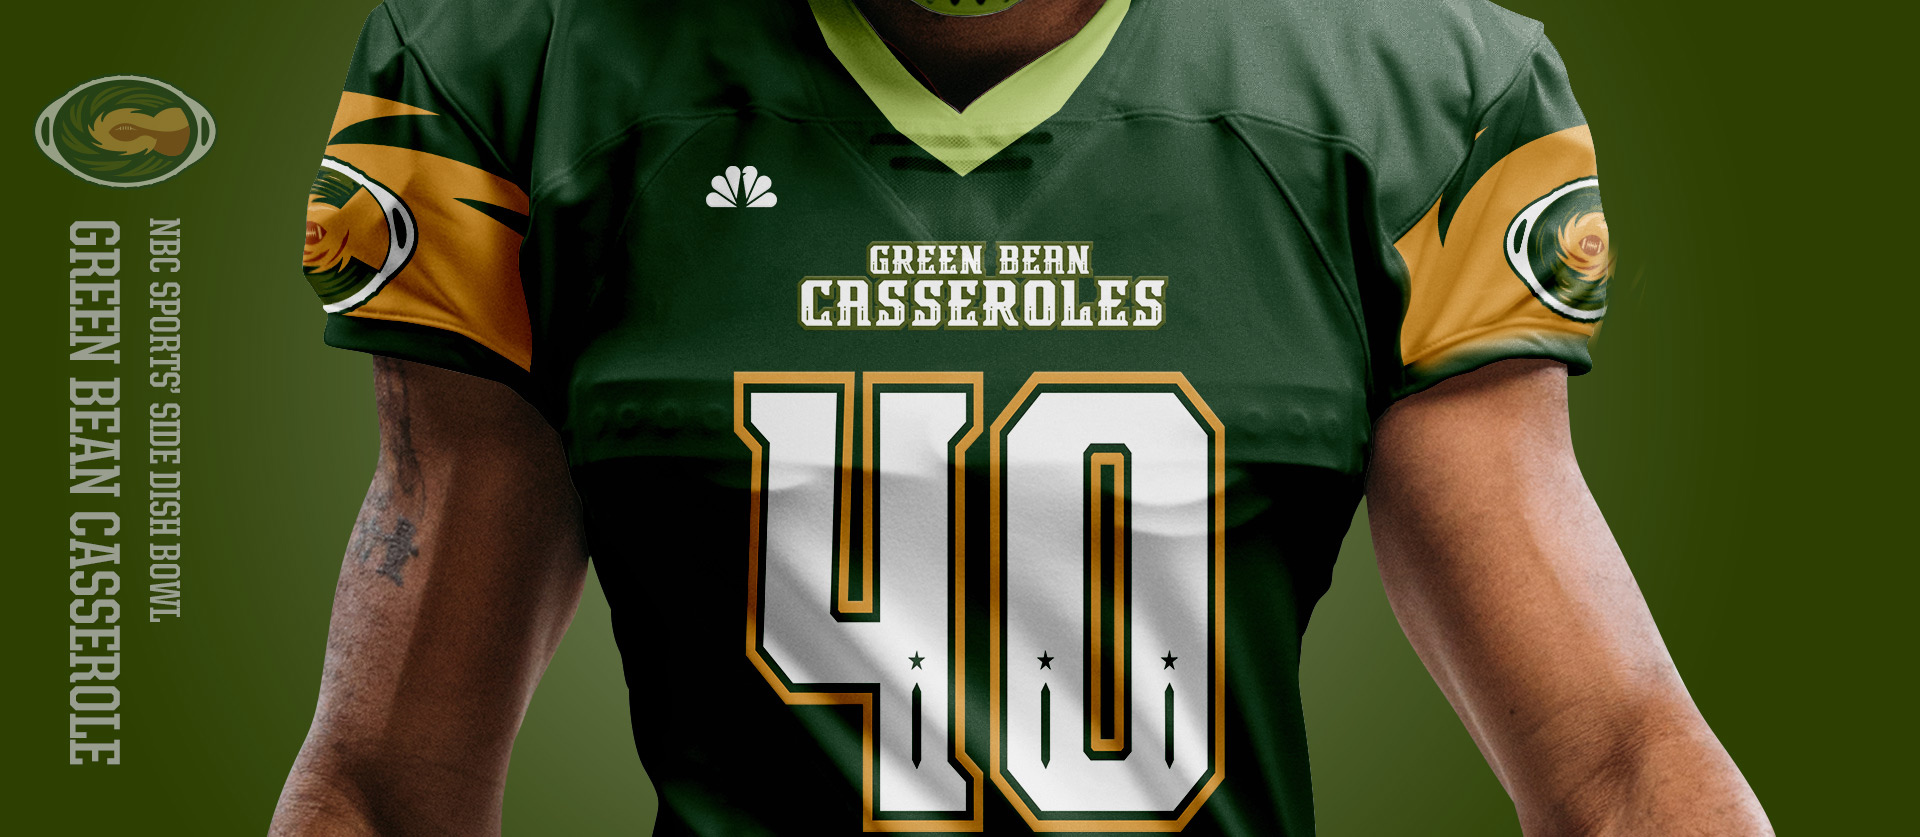 Green Bean Casseroles Front - Football Uniform Design for NBC Sports Thanksgiving Side Dish Bowl